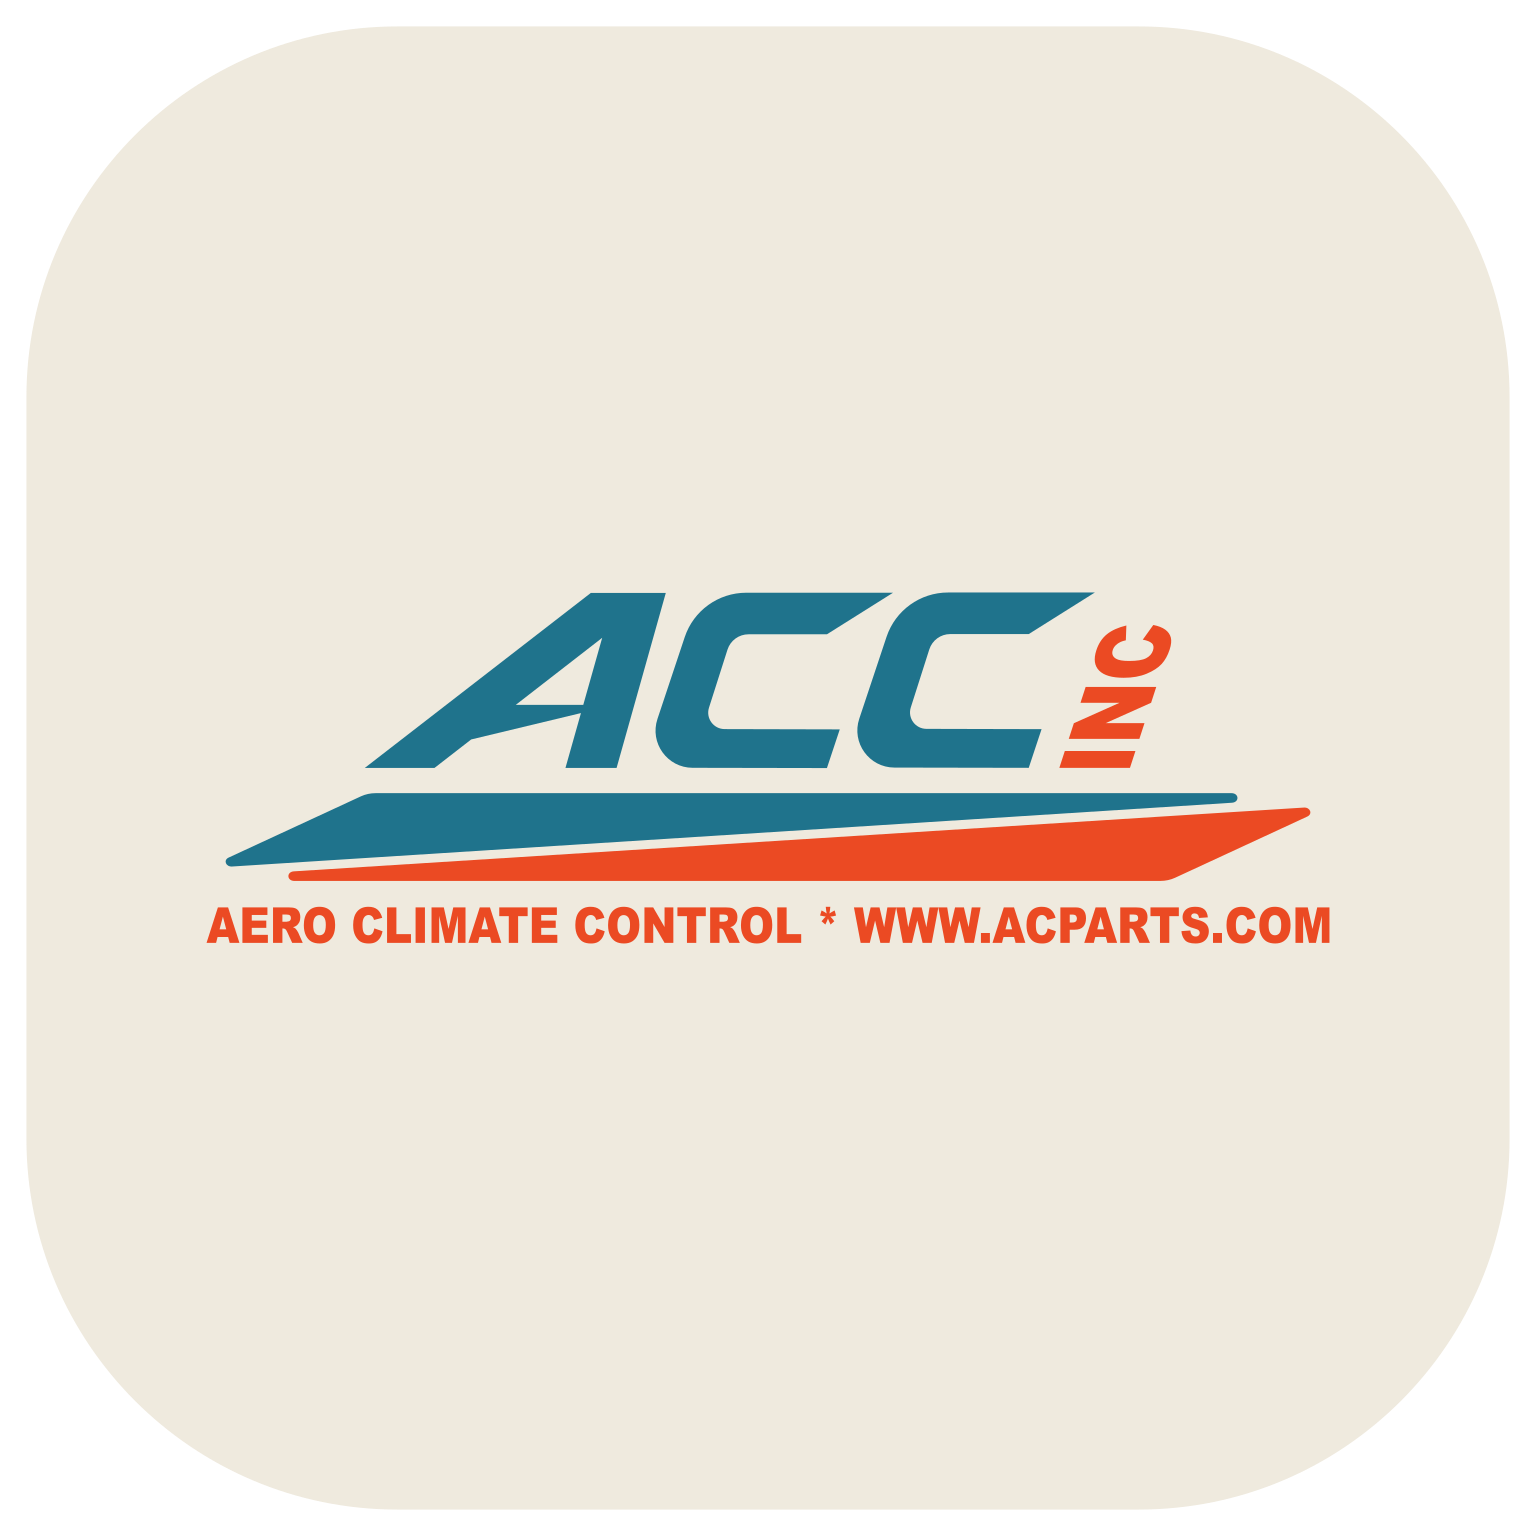 Aero Climate Control Inc. dba AC Parts Warehouse, dba acparts.com